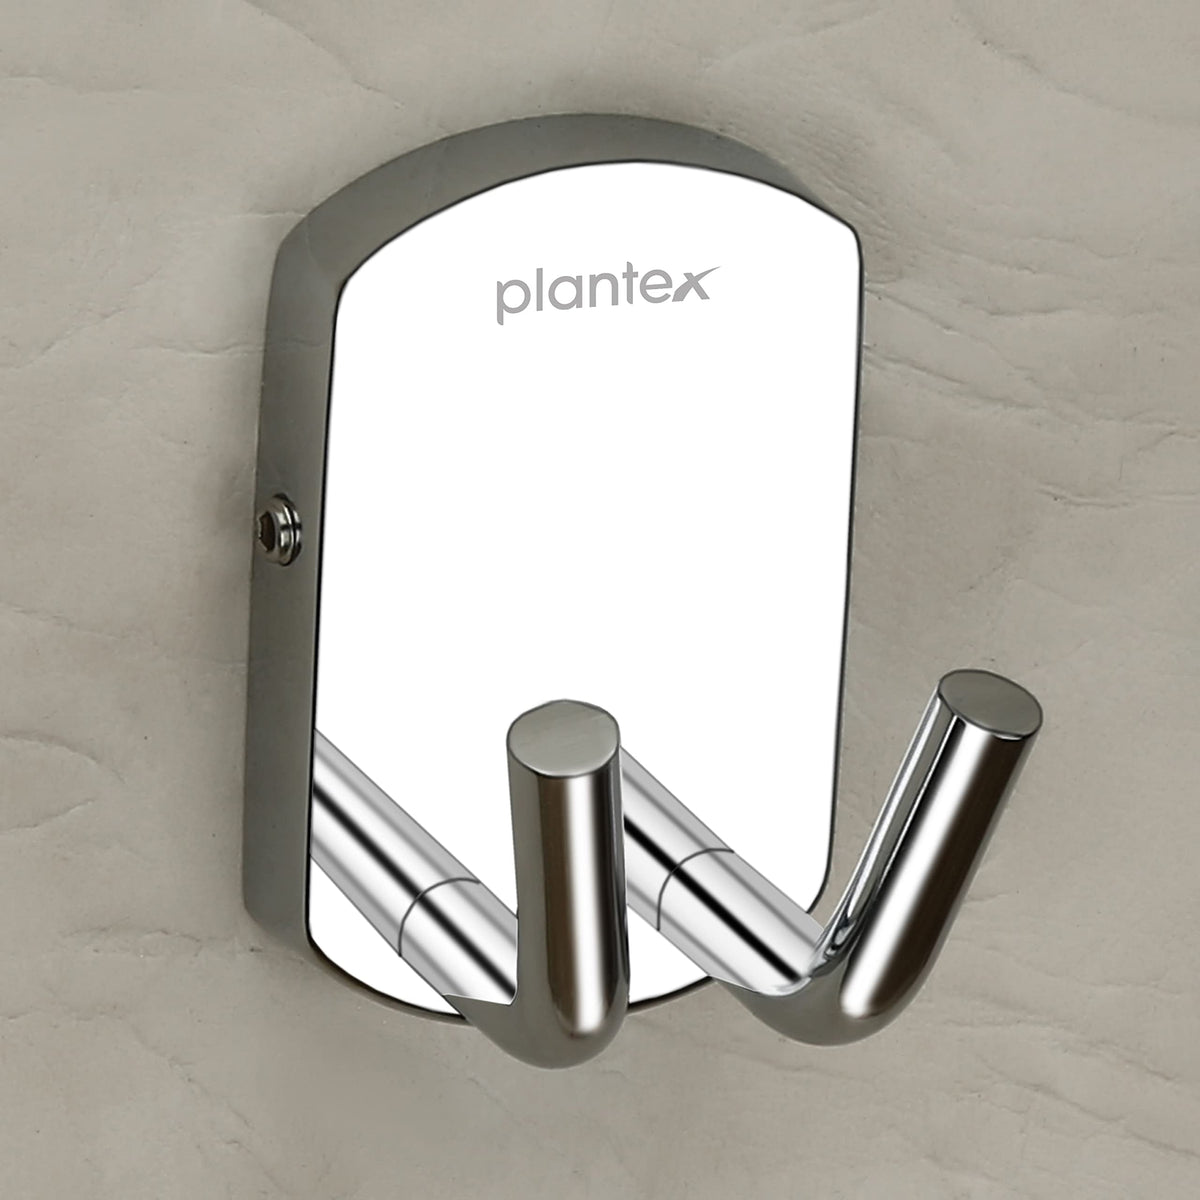 Plantex 304 Grade Stainless Steel Robe Hook/Cloth-Towel Hanger/Door Hanger-Hook/Bathroom Accessories - Pack of 1 (APS-855-Chrome)